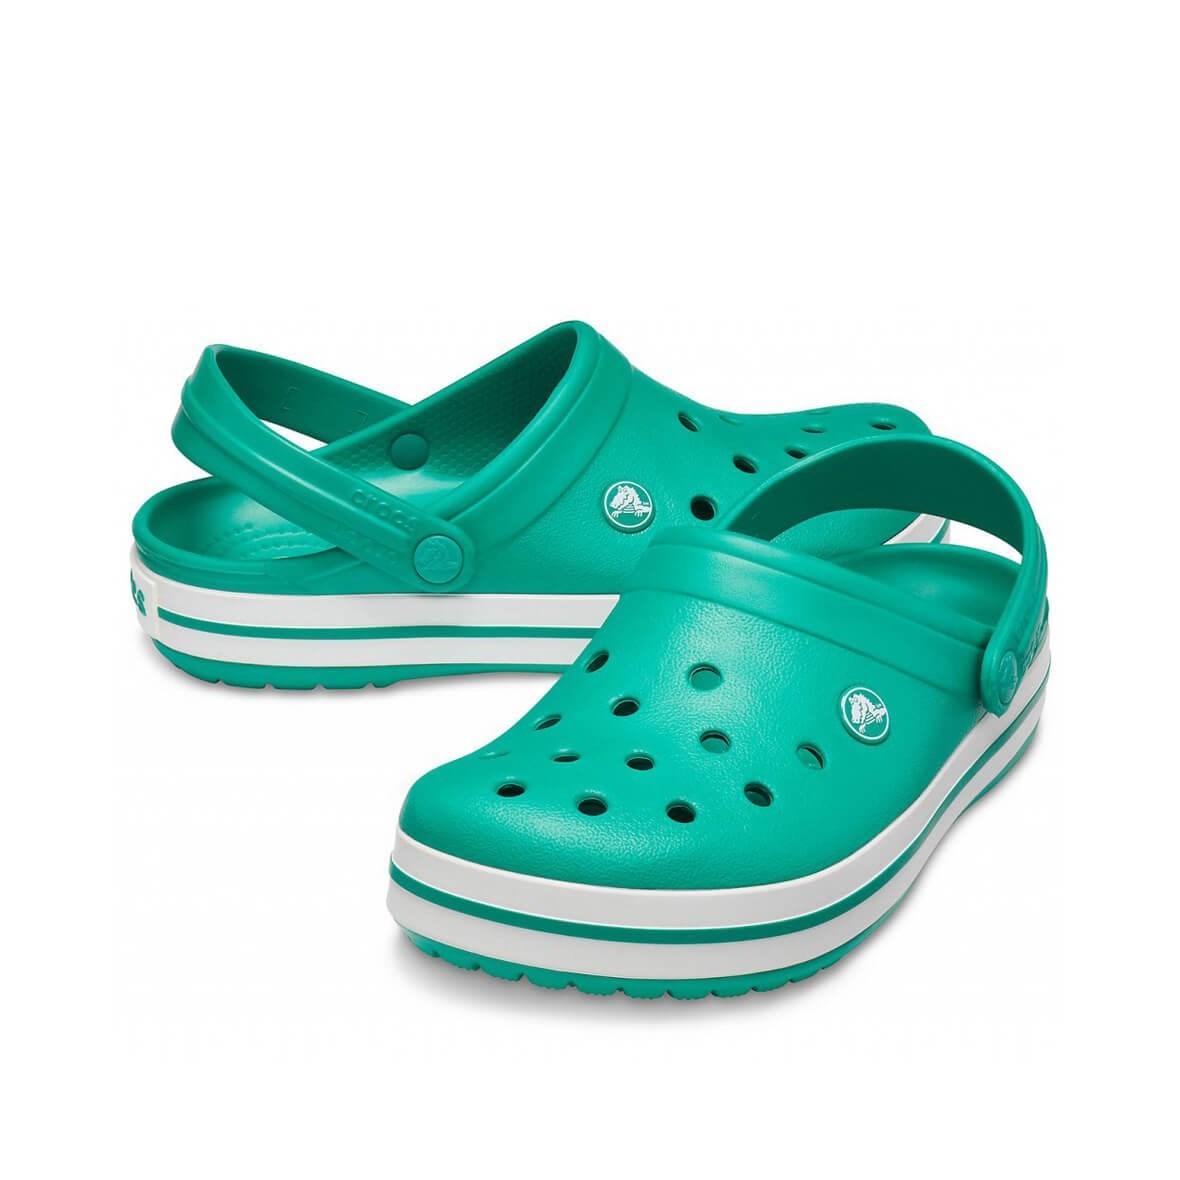 Crocs Crocband Deep Green/White (Derin Yeşil/Beyaz) Bayan Terlik & Sandalet